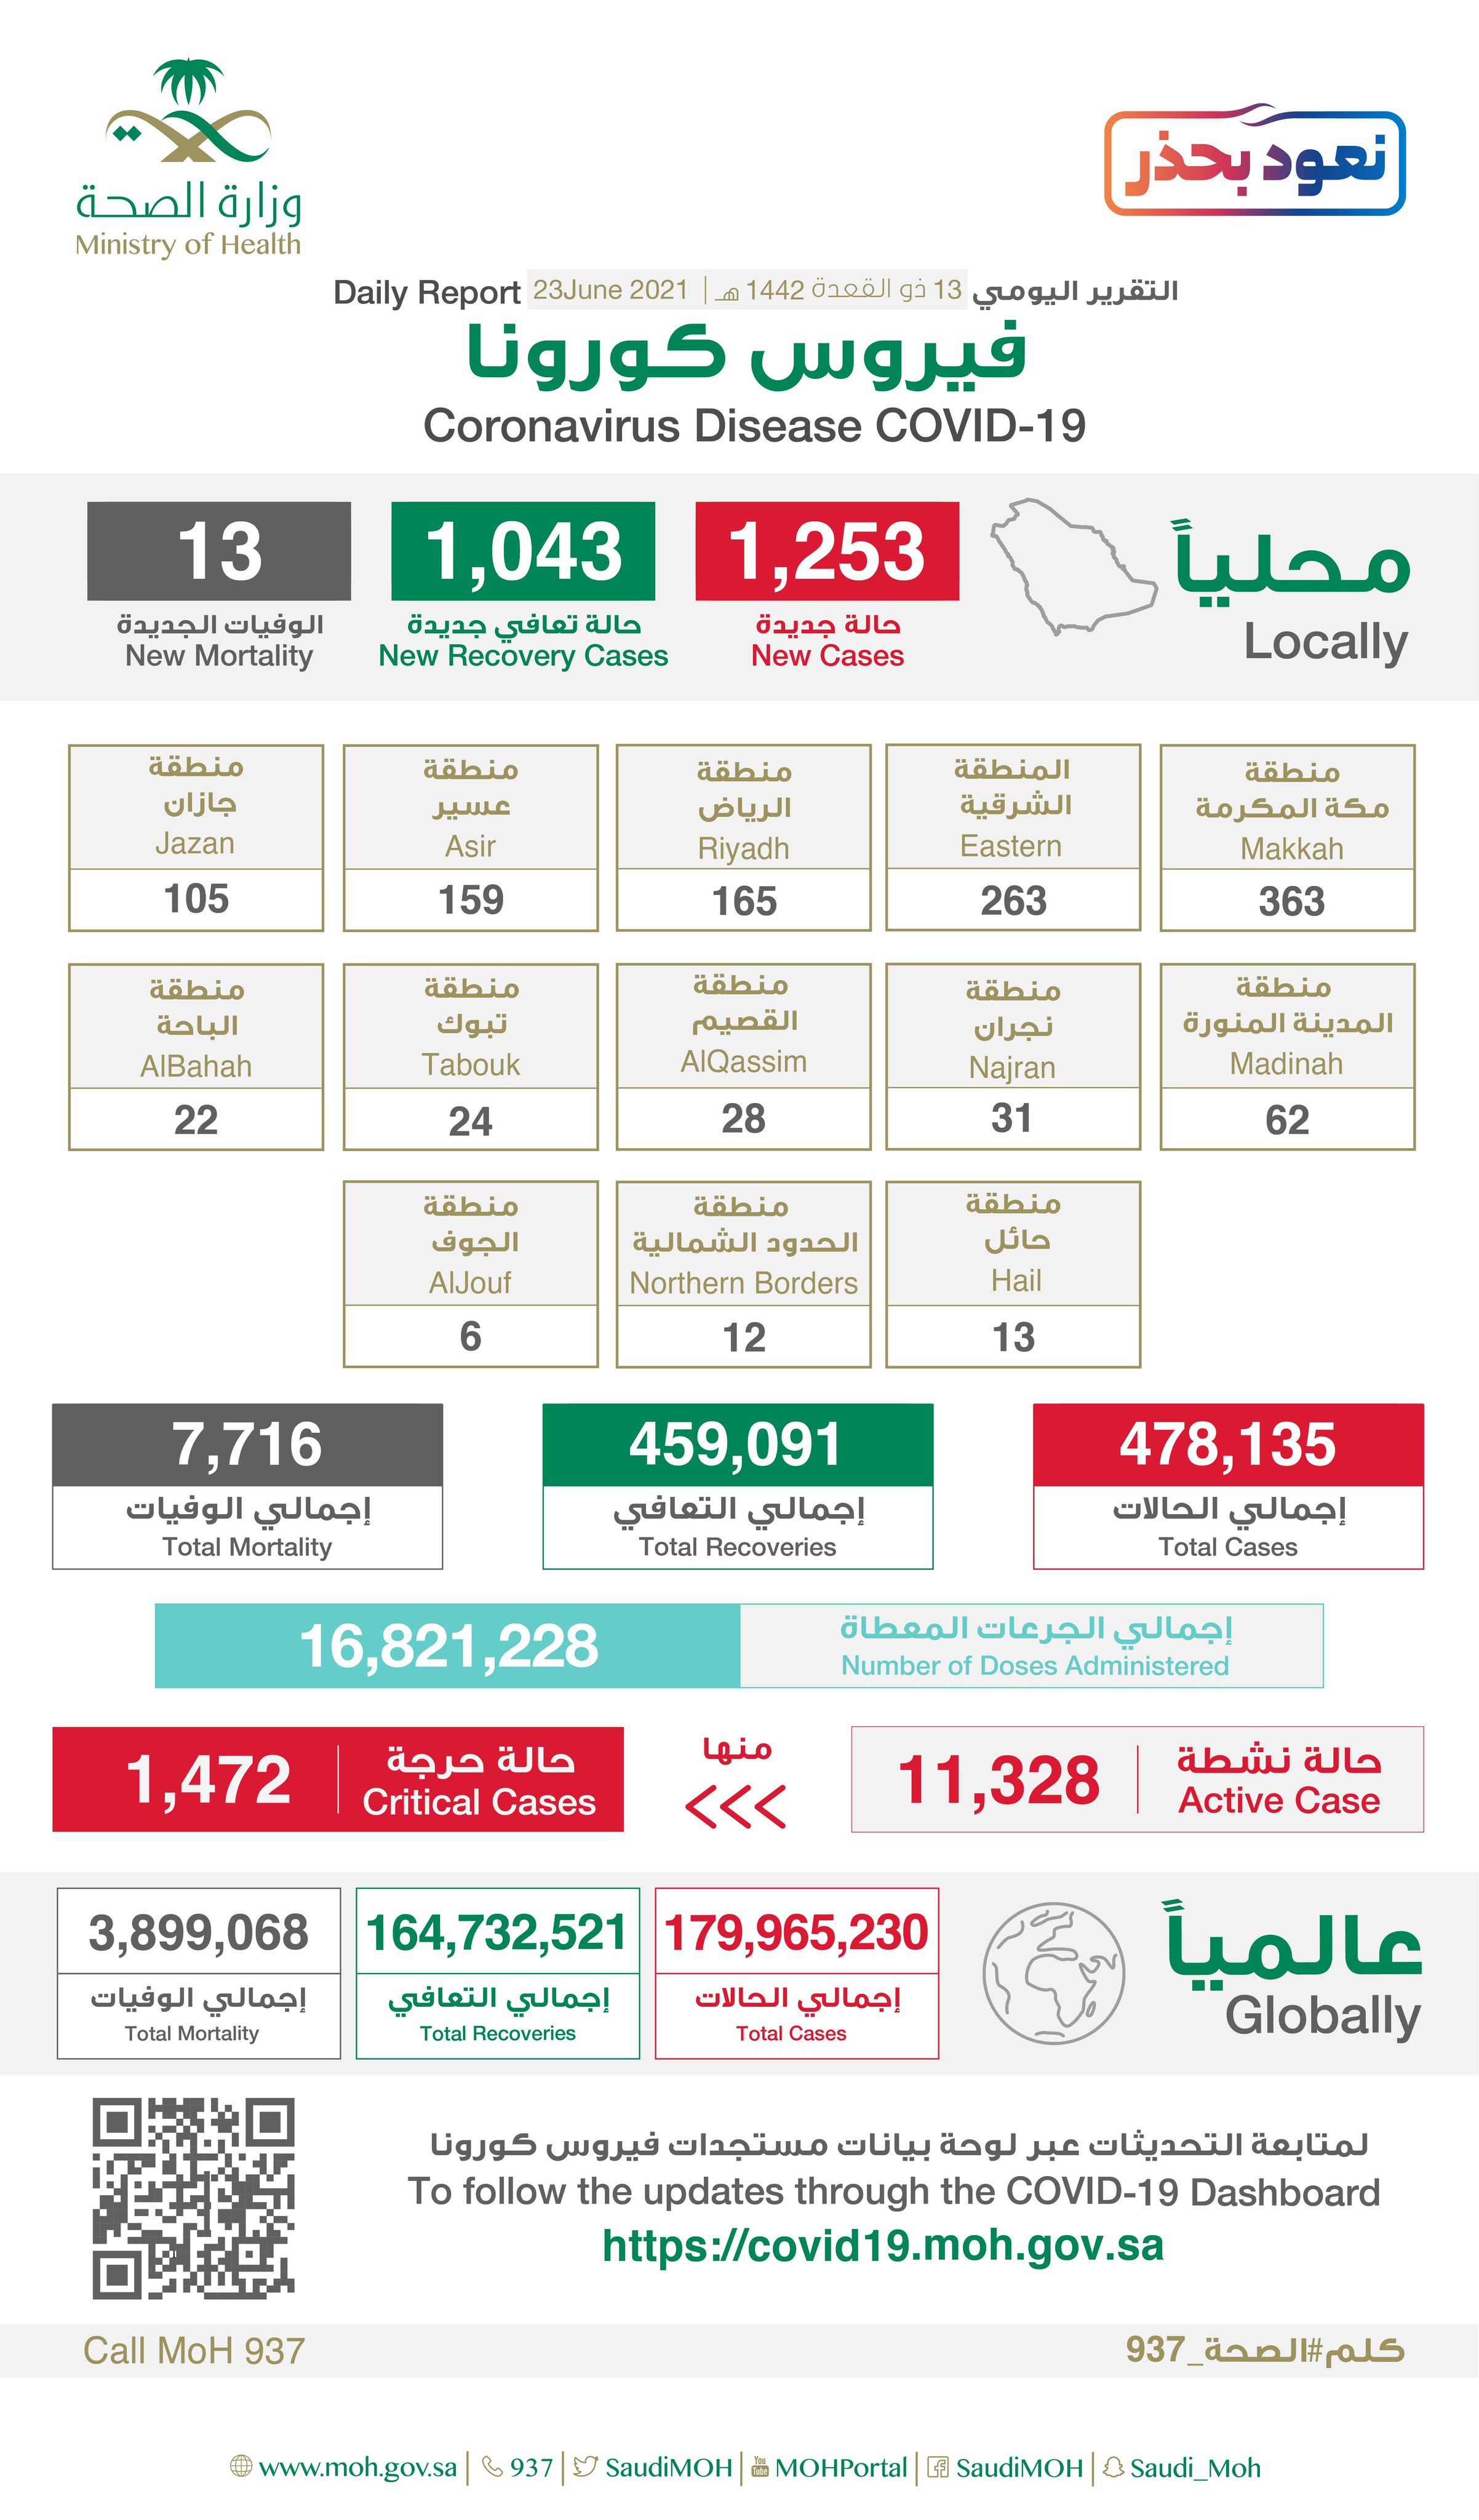 Saudi Arabia Coronavirus : Total Cases :478,135 , New Cases : 1,253 , Cured : 459,091 , Deaths: 7,716, Active Cases : 11,328